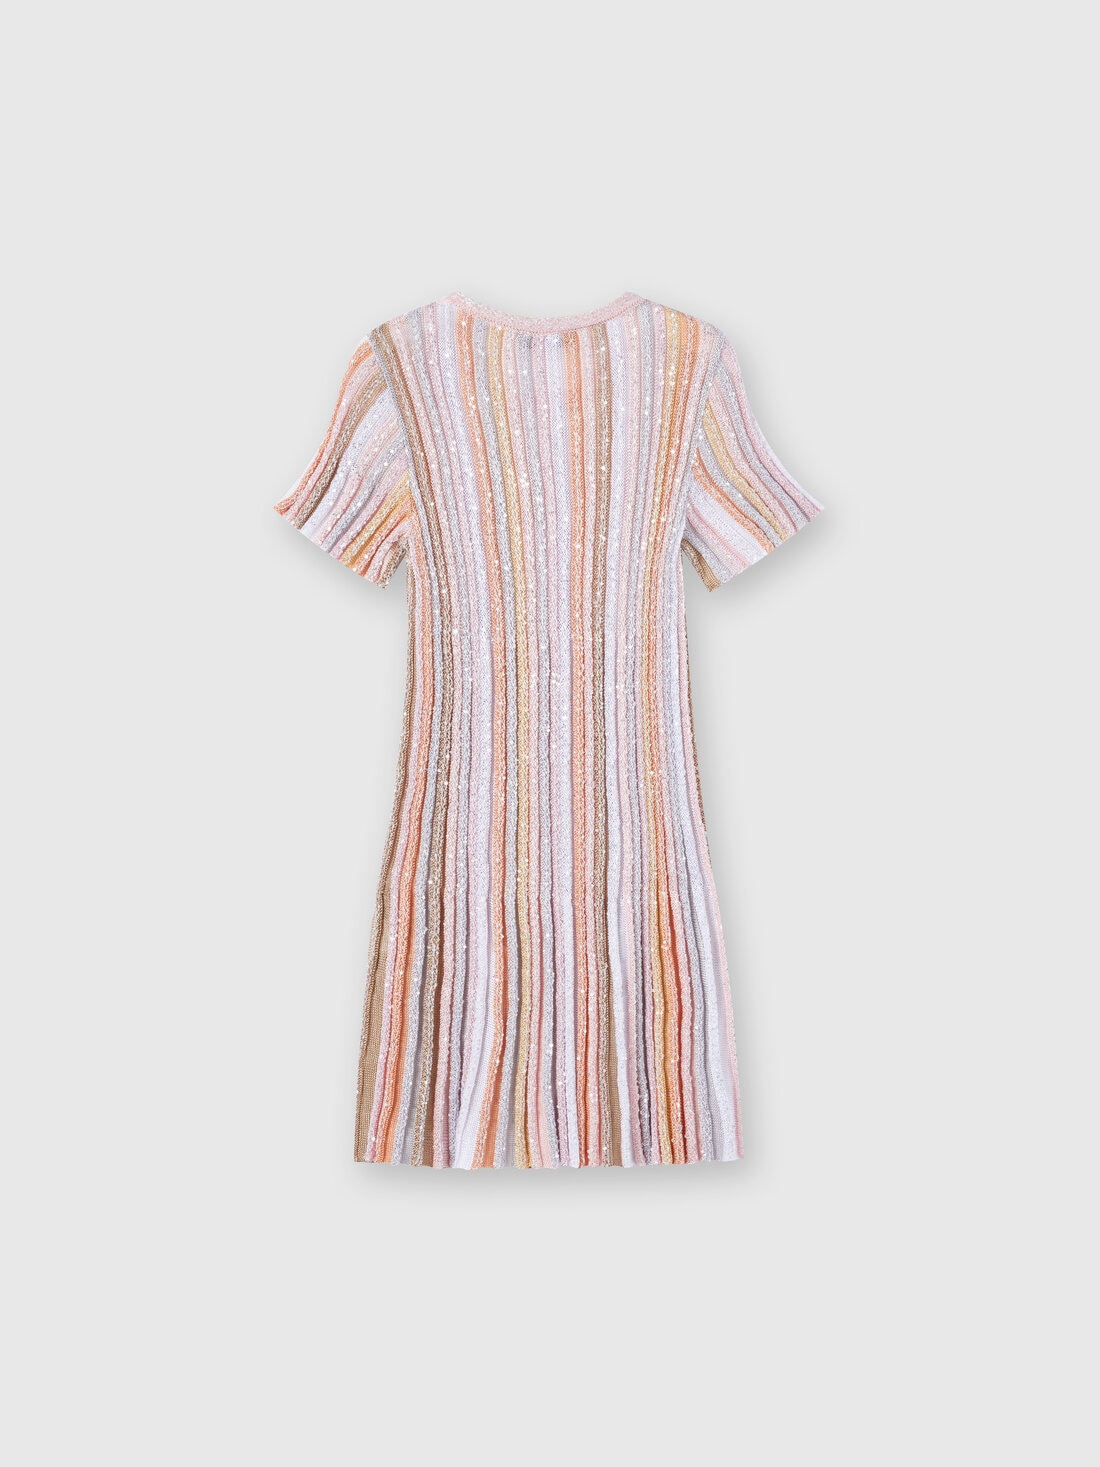 Short-sleeved dress in pleated viscose knit, Multicoloured  - KS24SG08BV00FXSM923 - 1